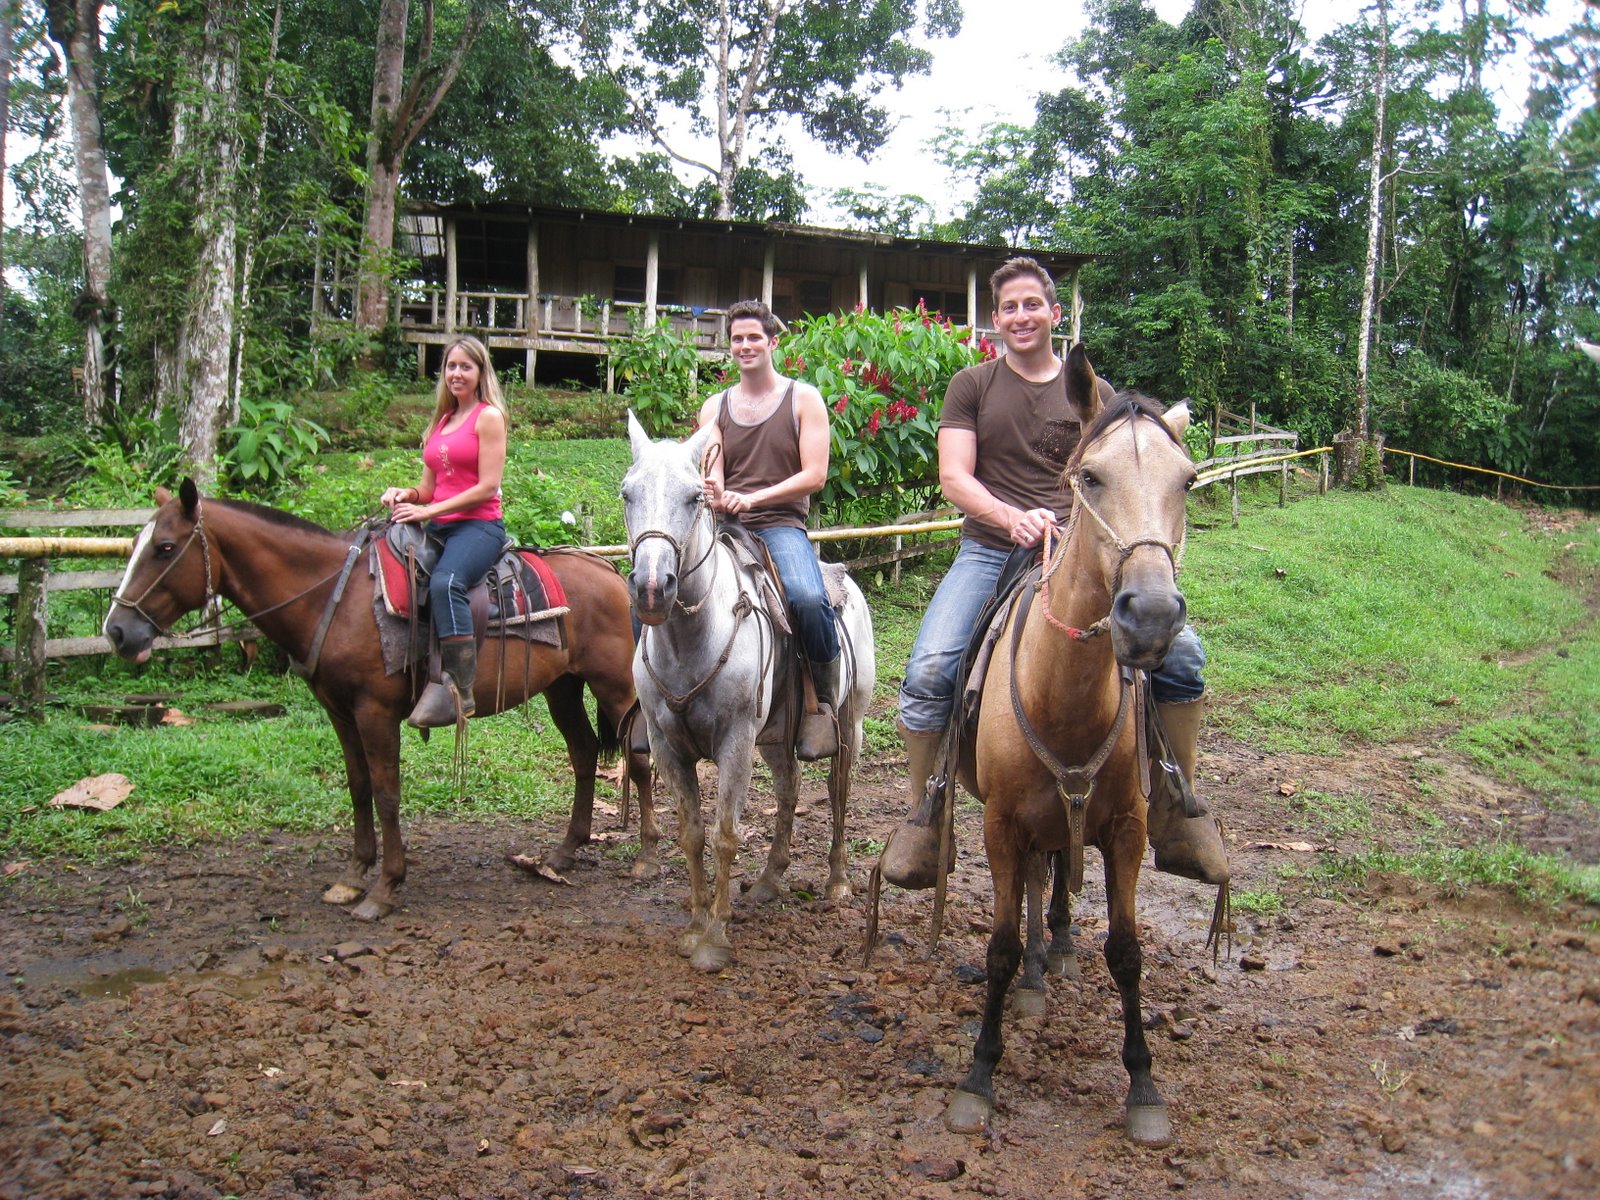  Horseback riding with Rick's sister. 